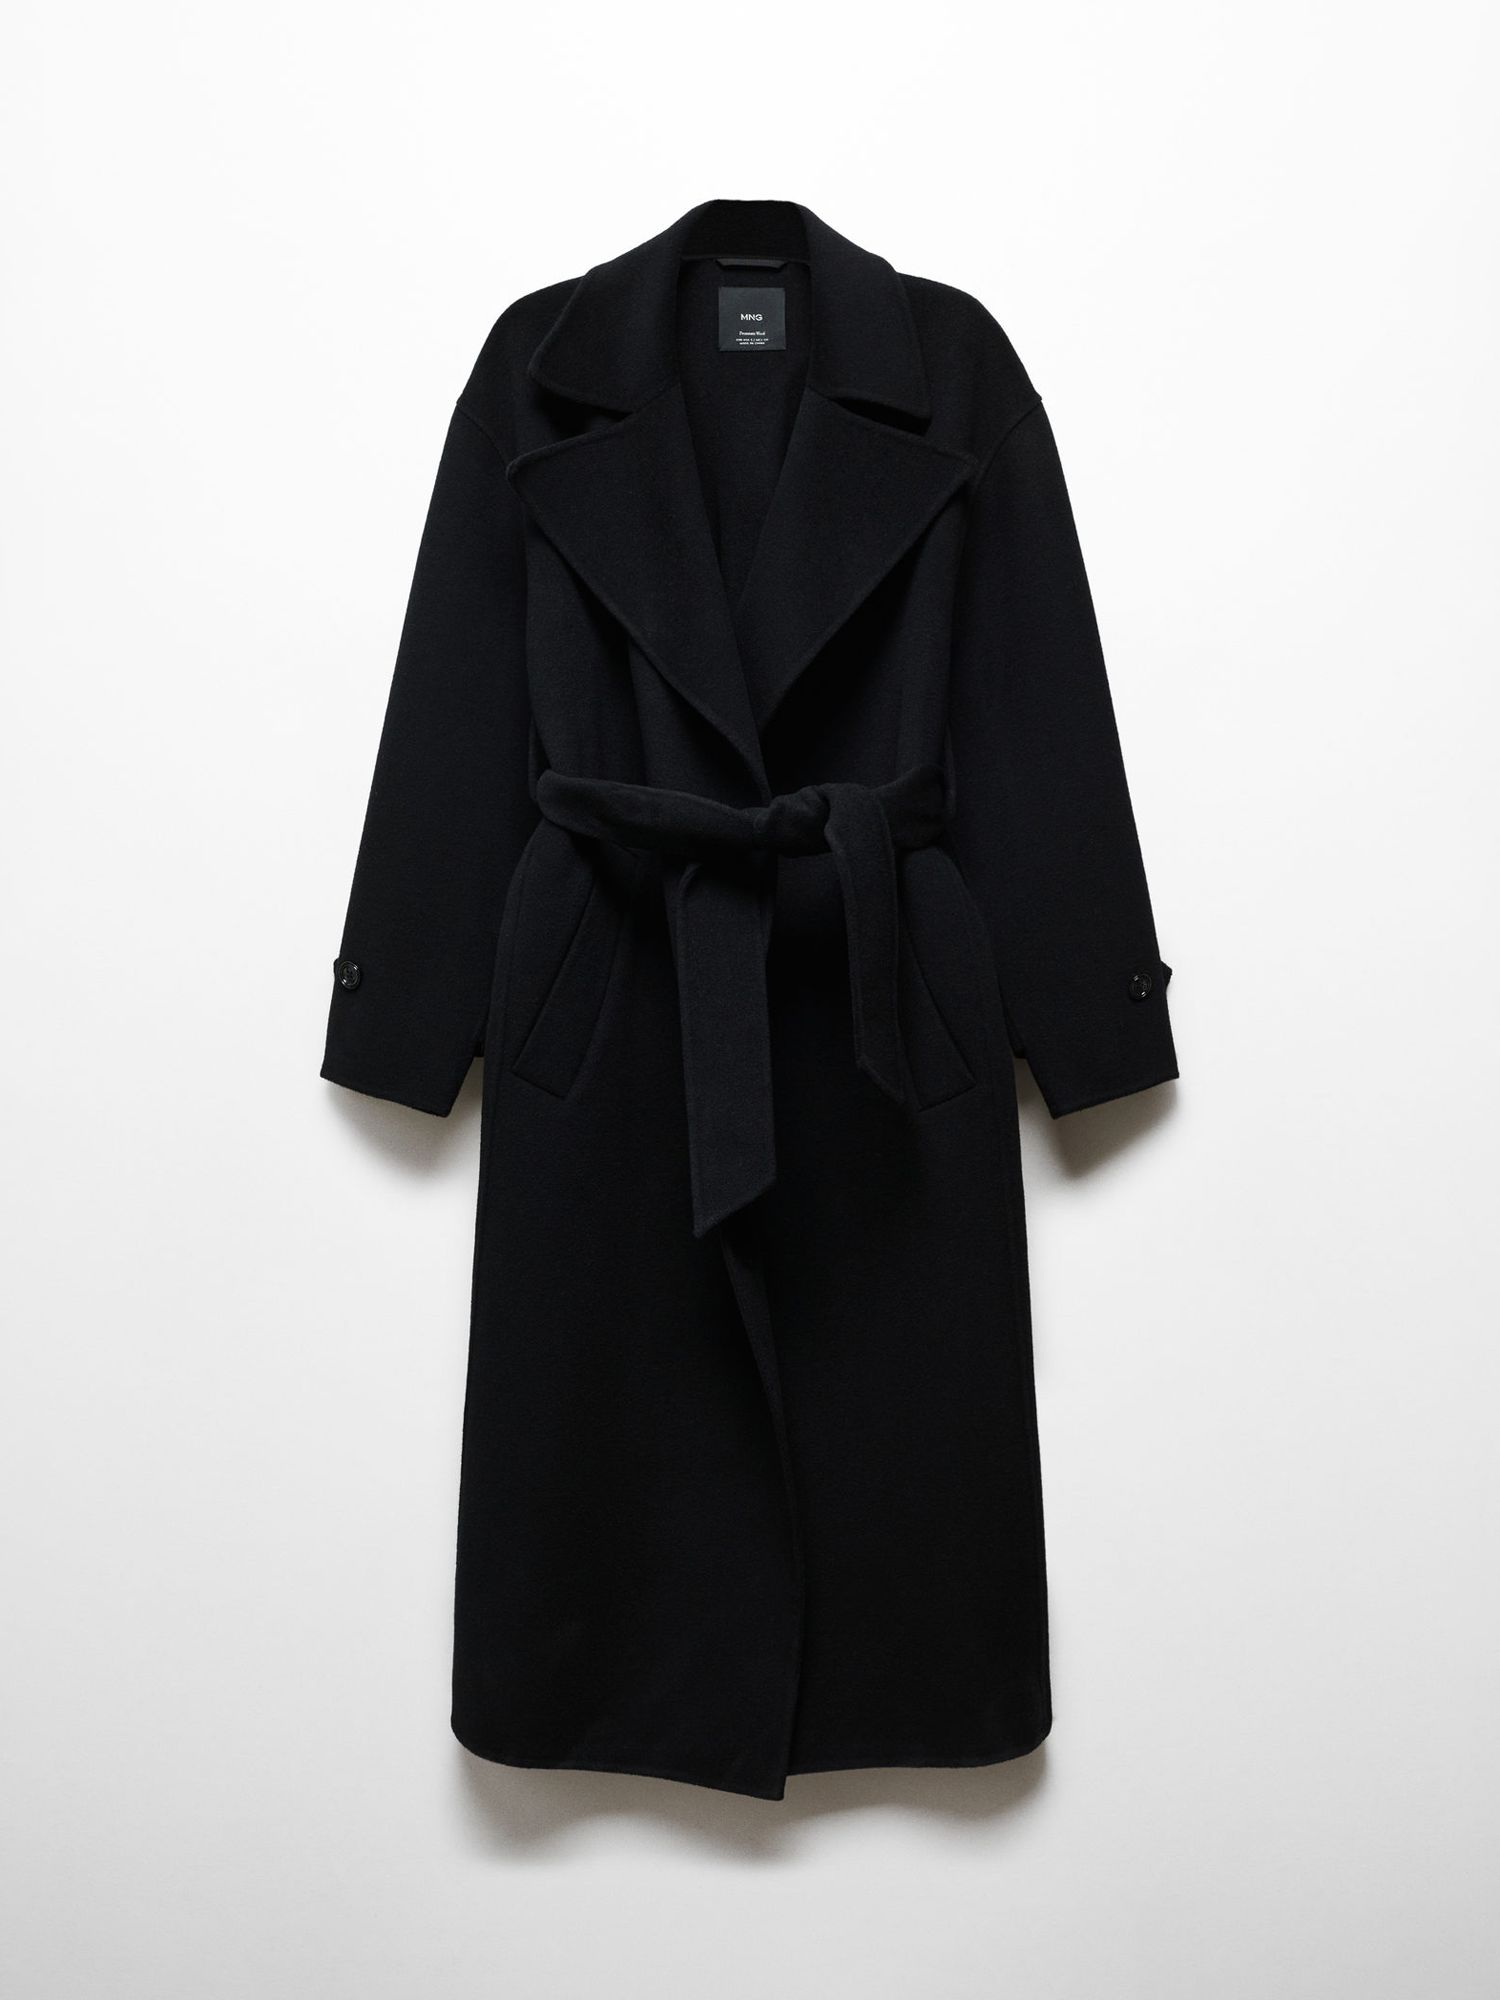 Mango Verdi Wool Blend Coat, Black at John Lewis & Partners